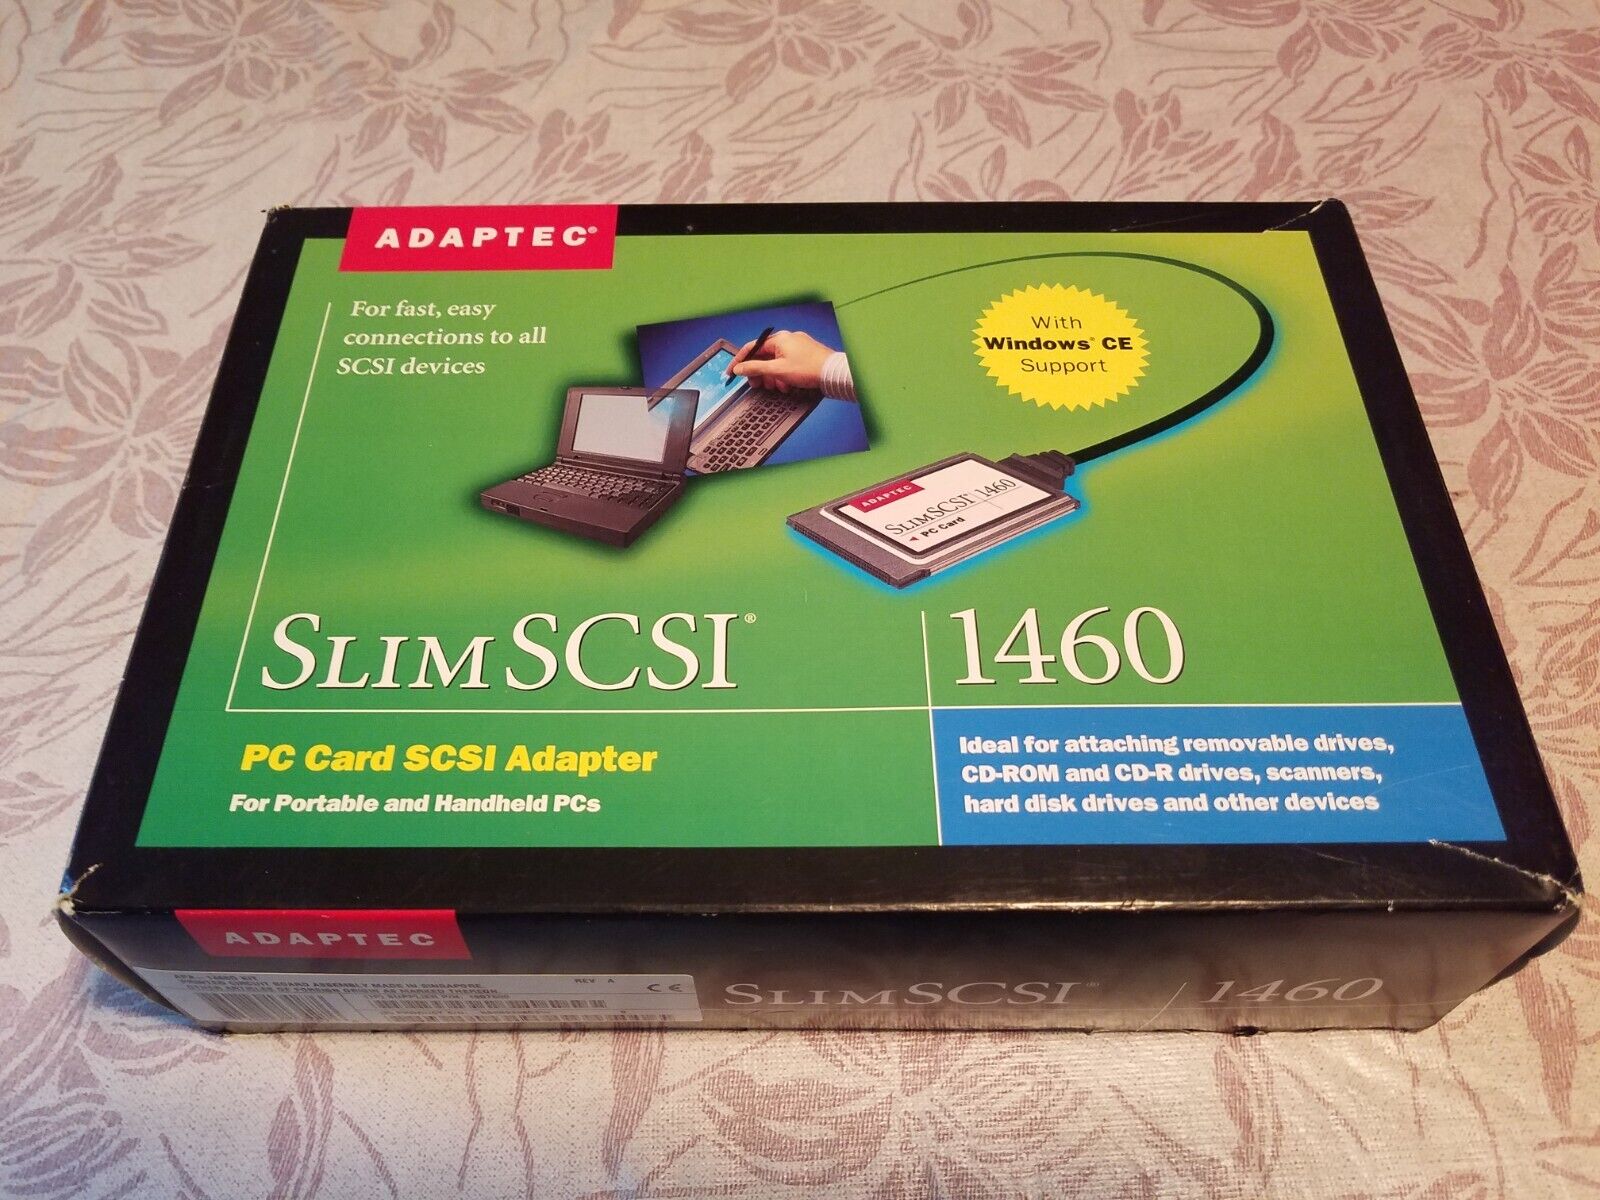 Adaptec SlimSCSI 1460 PCMCIA SCSI Adapter PC Card Kit APA-1460D in Box